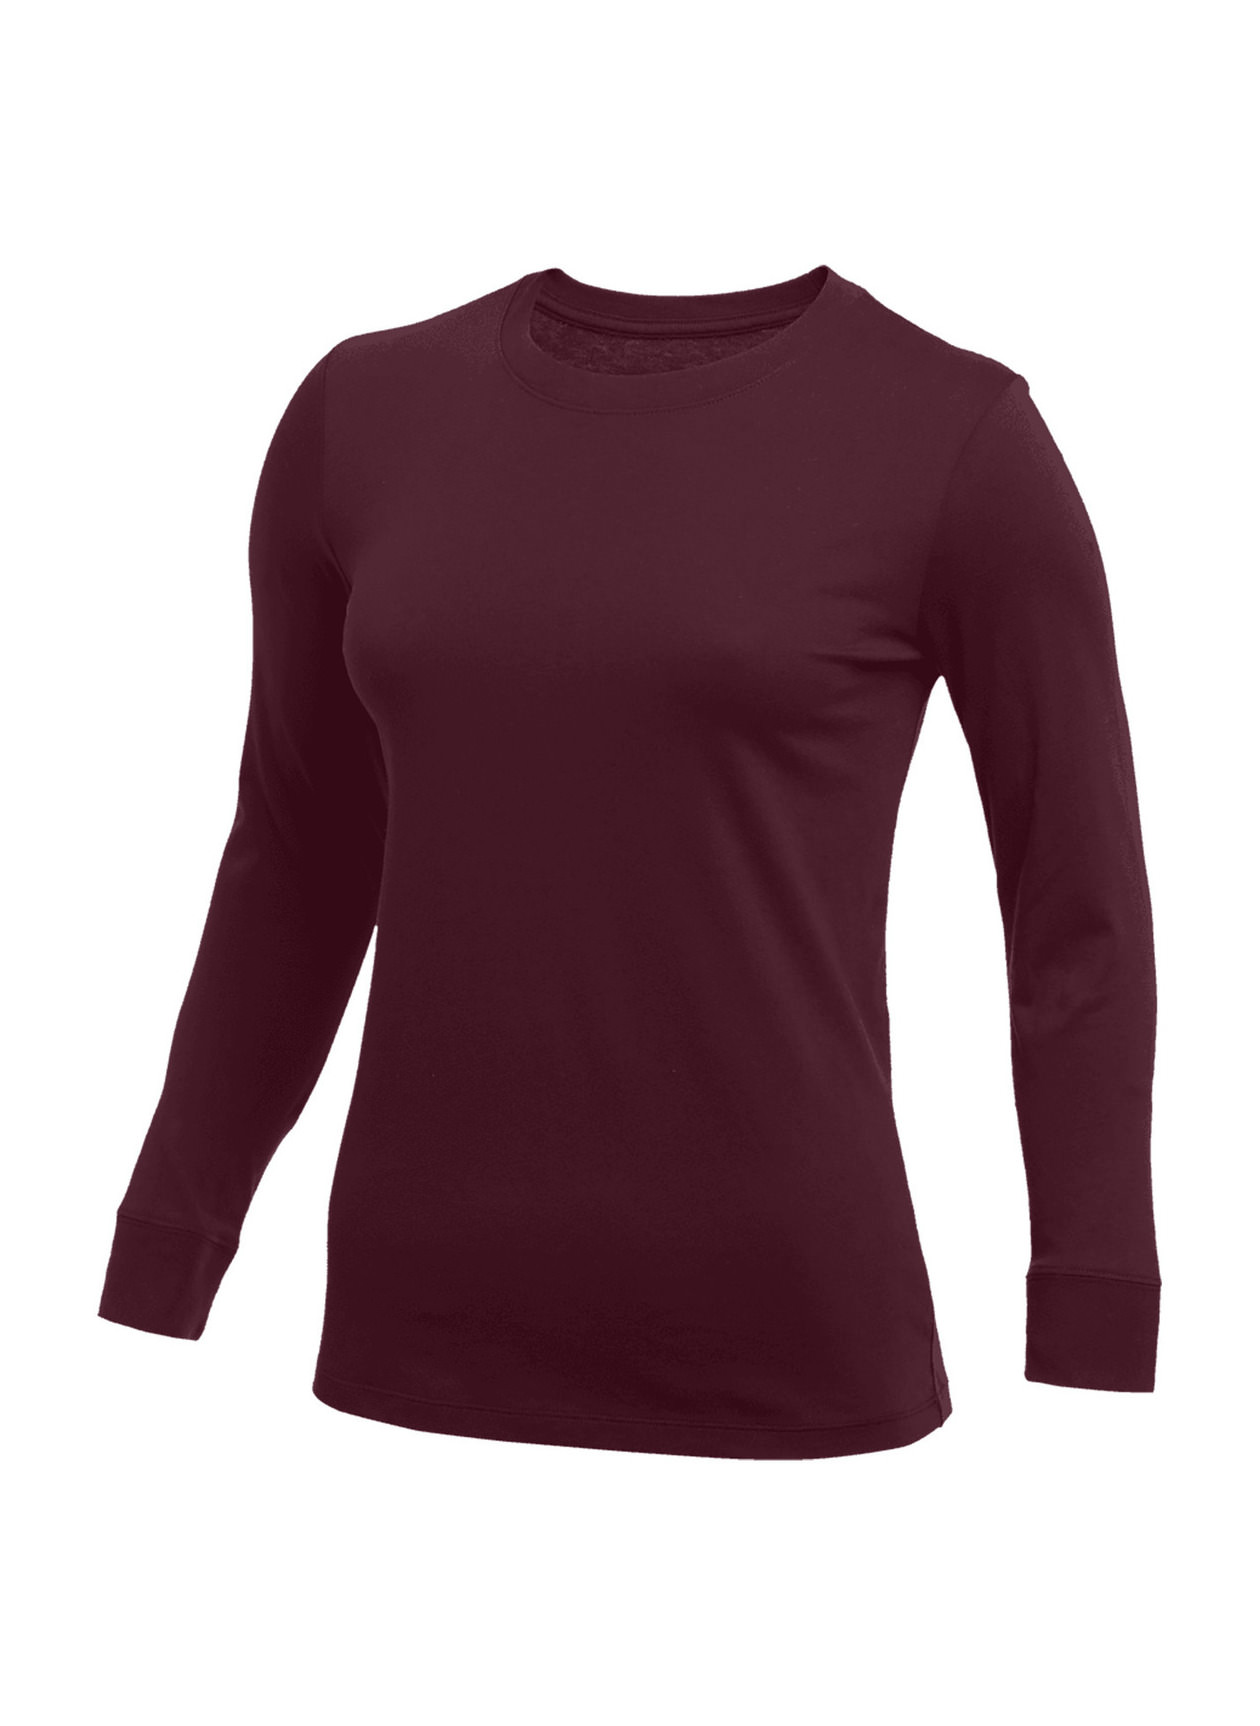 Nike Women's Deep Maroon Long-Sleeve T-Shirt